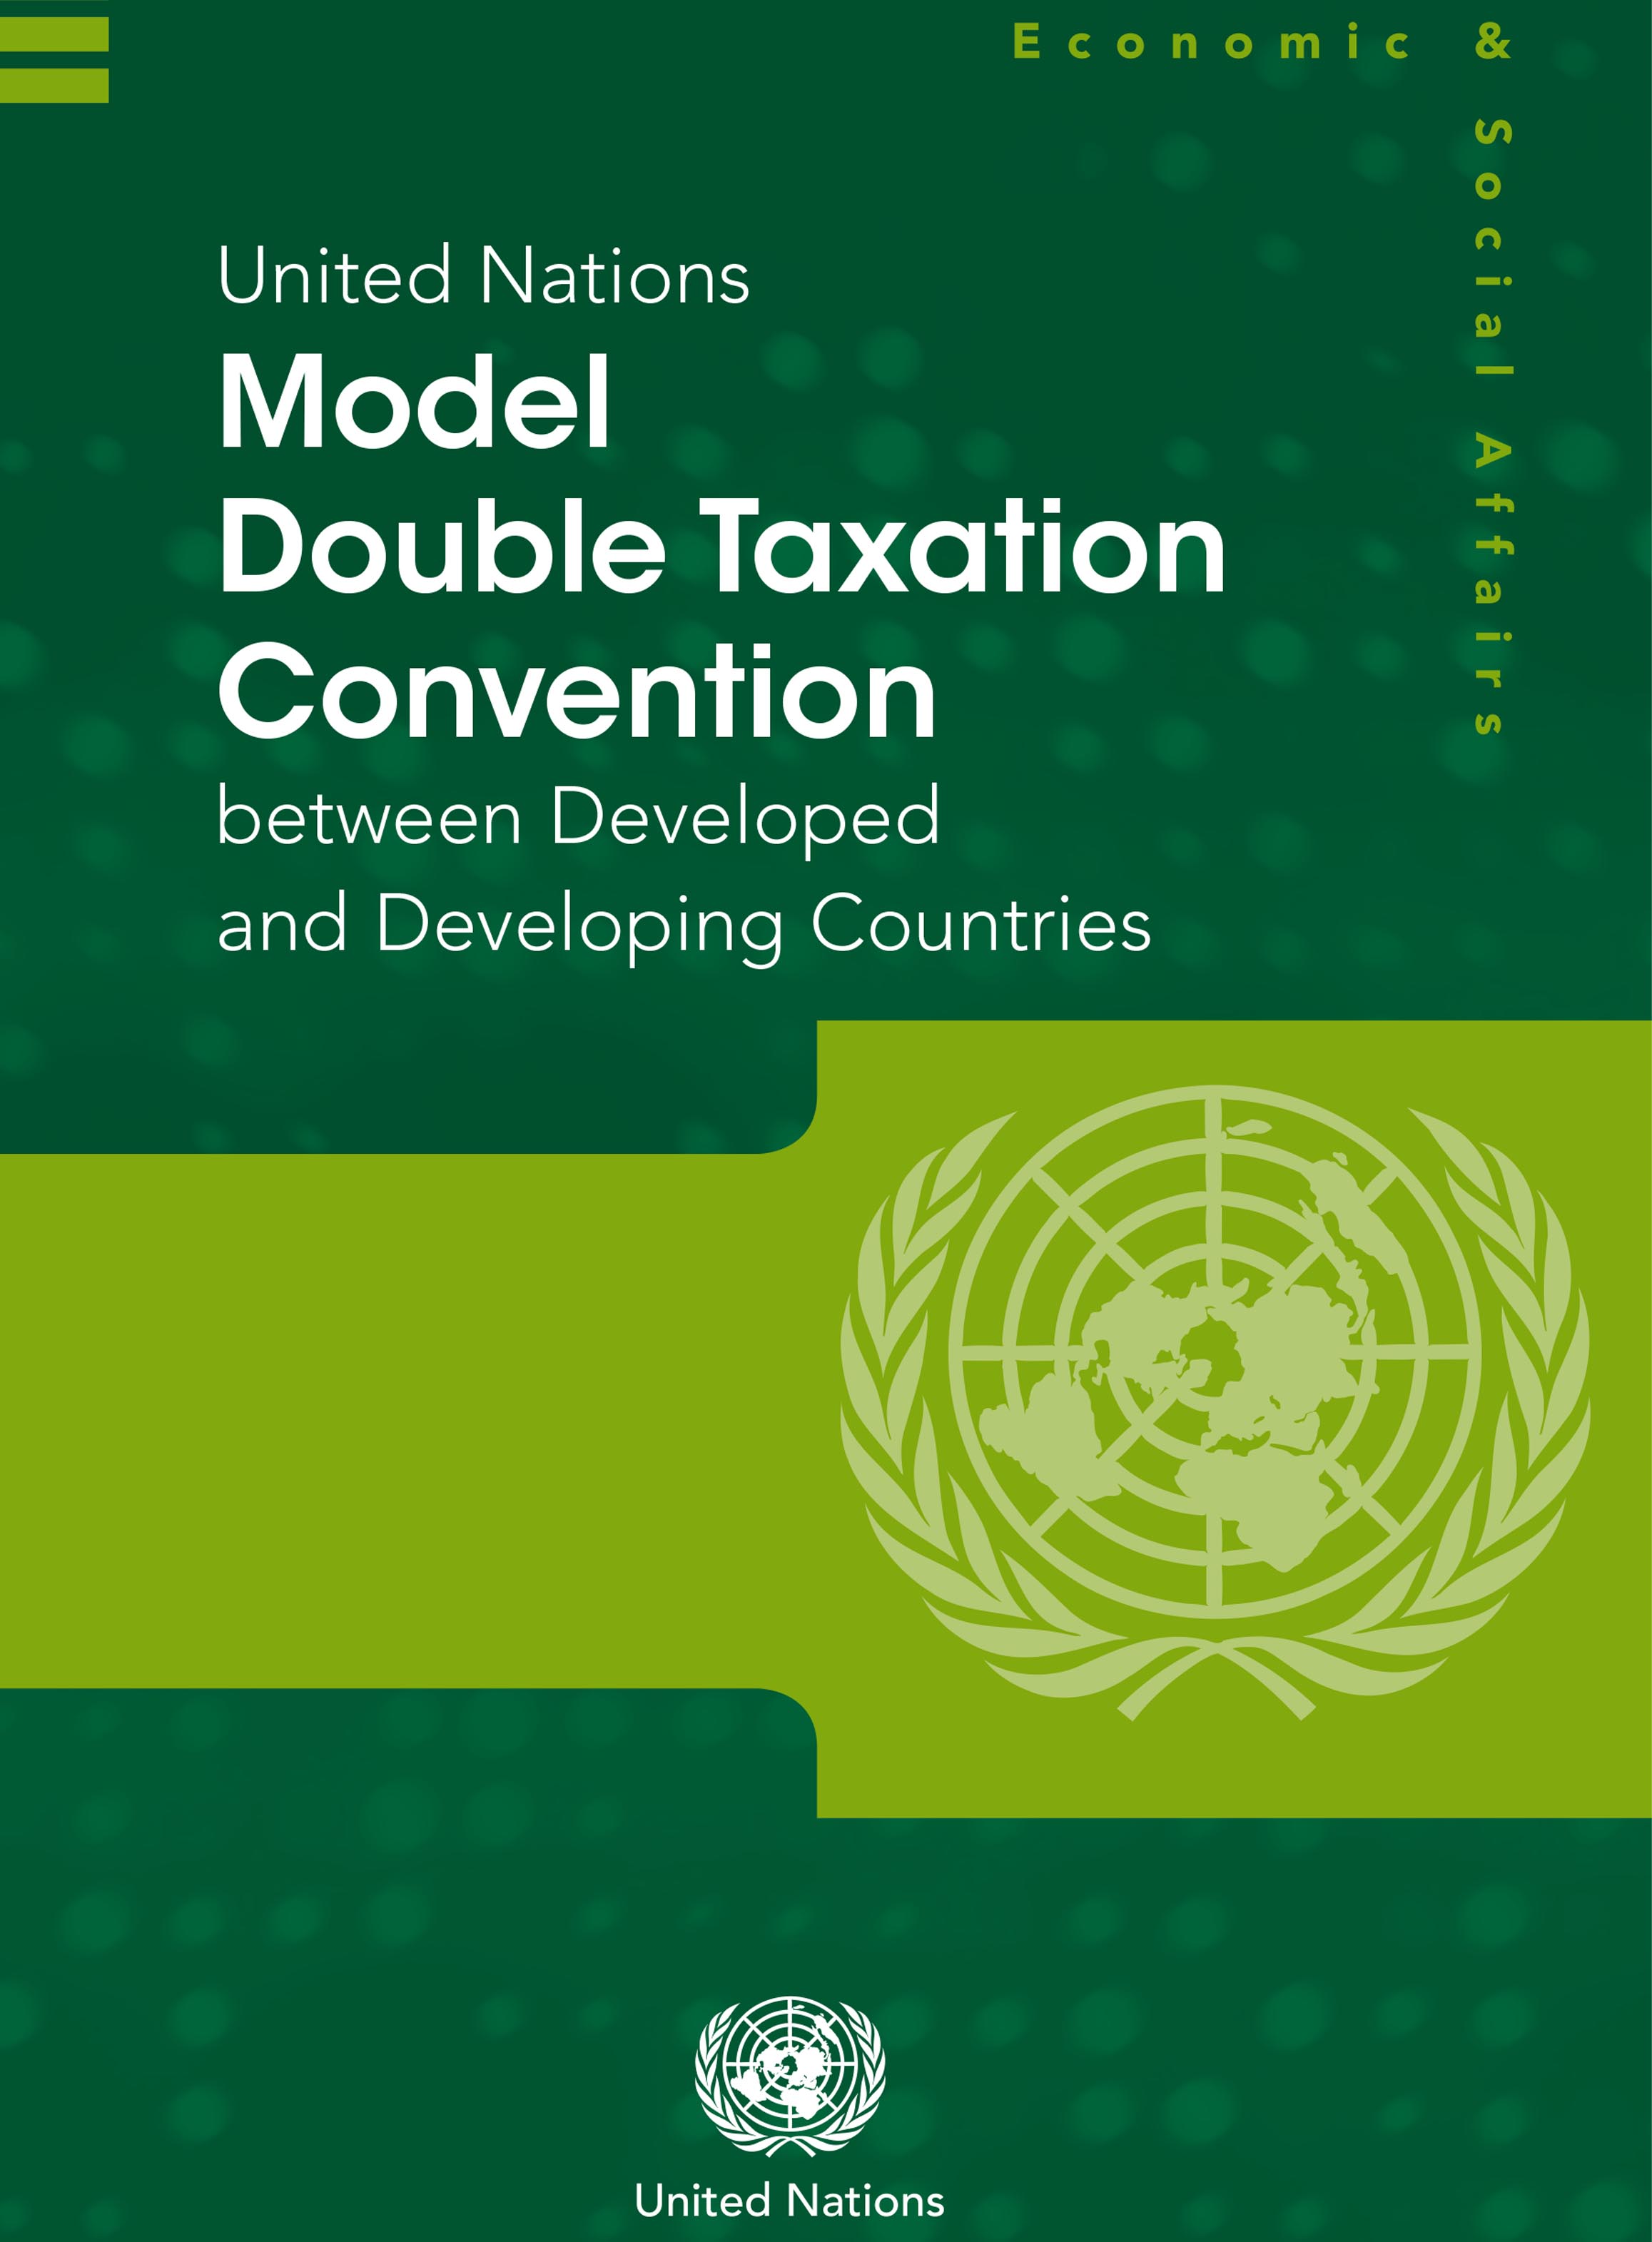 UN Model cover